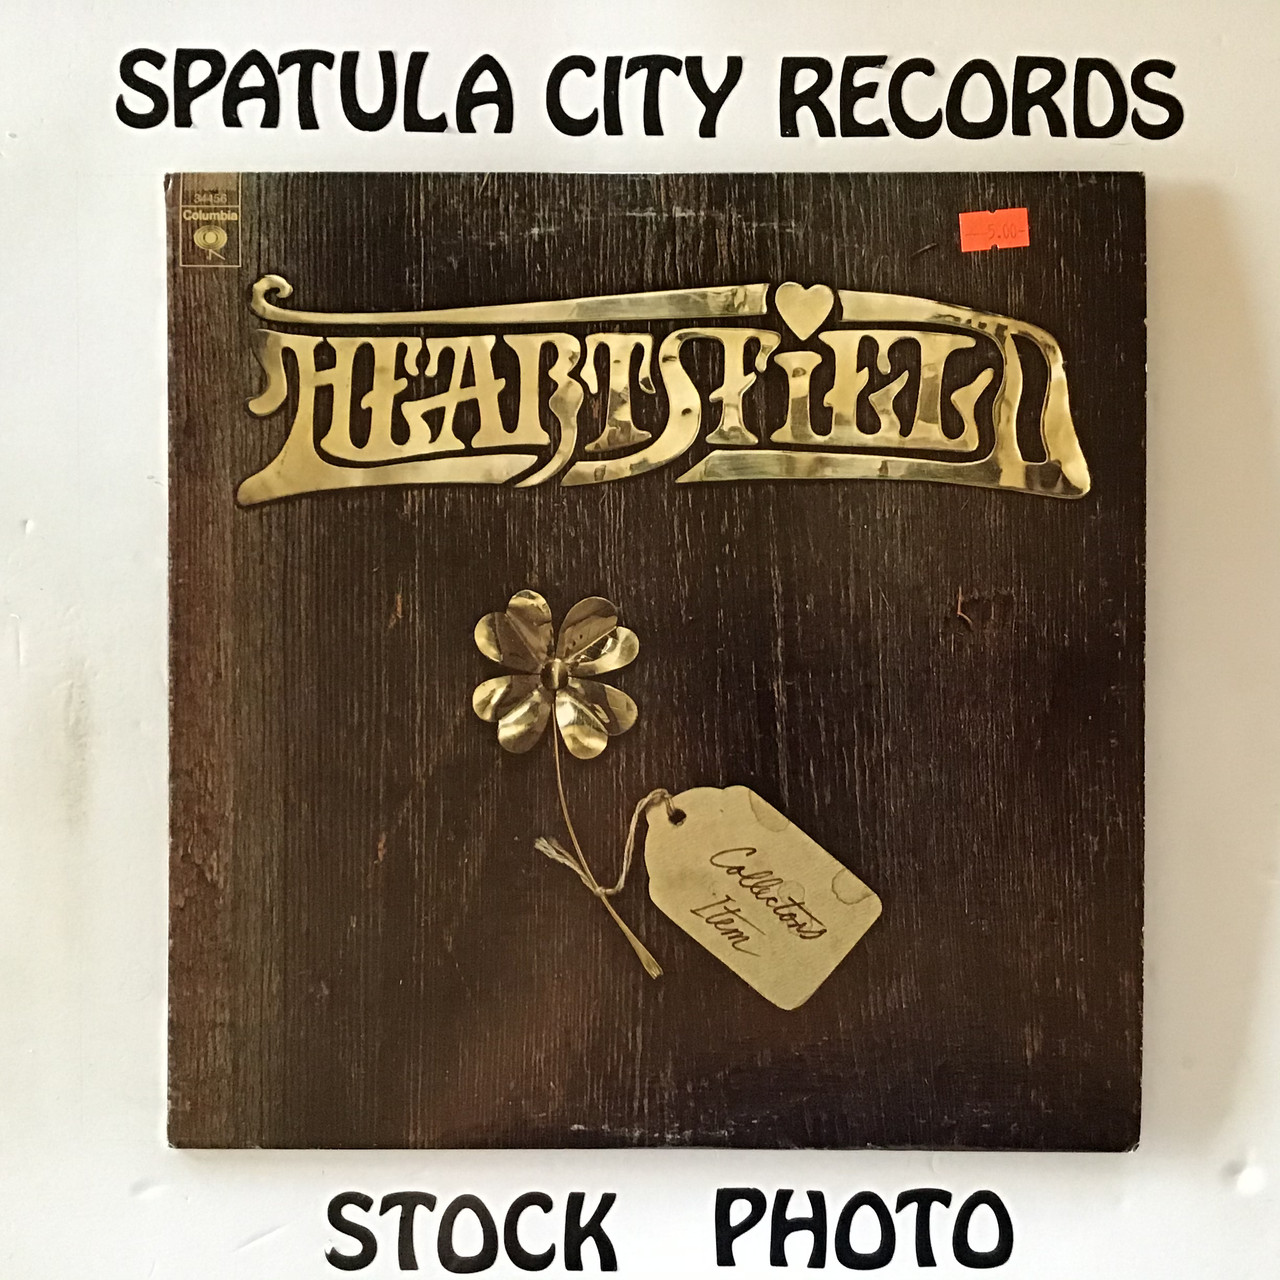 Heartsfield - Collectors Item - vinyl record LP